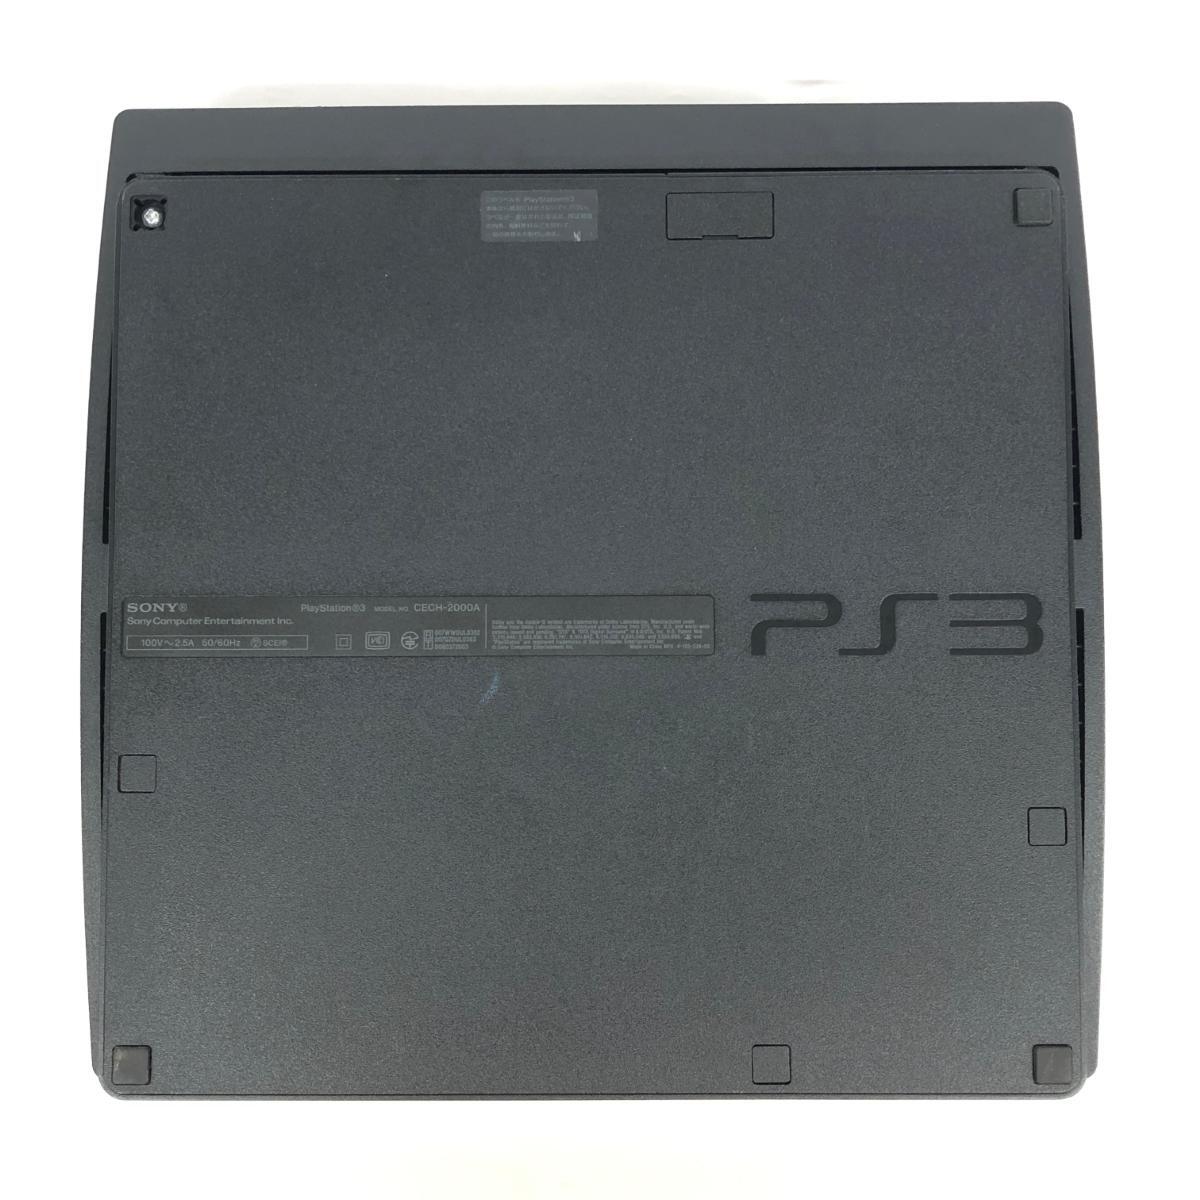 ◆SONY ソニー PlayStation3 ゲーム機本体のみ ◆ CECH-2000A ブラック ゲーム ホビーの画像6